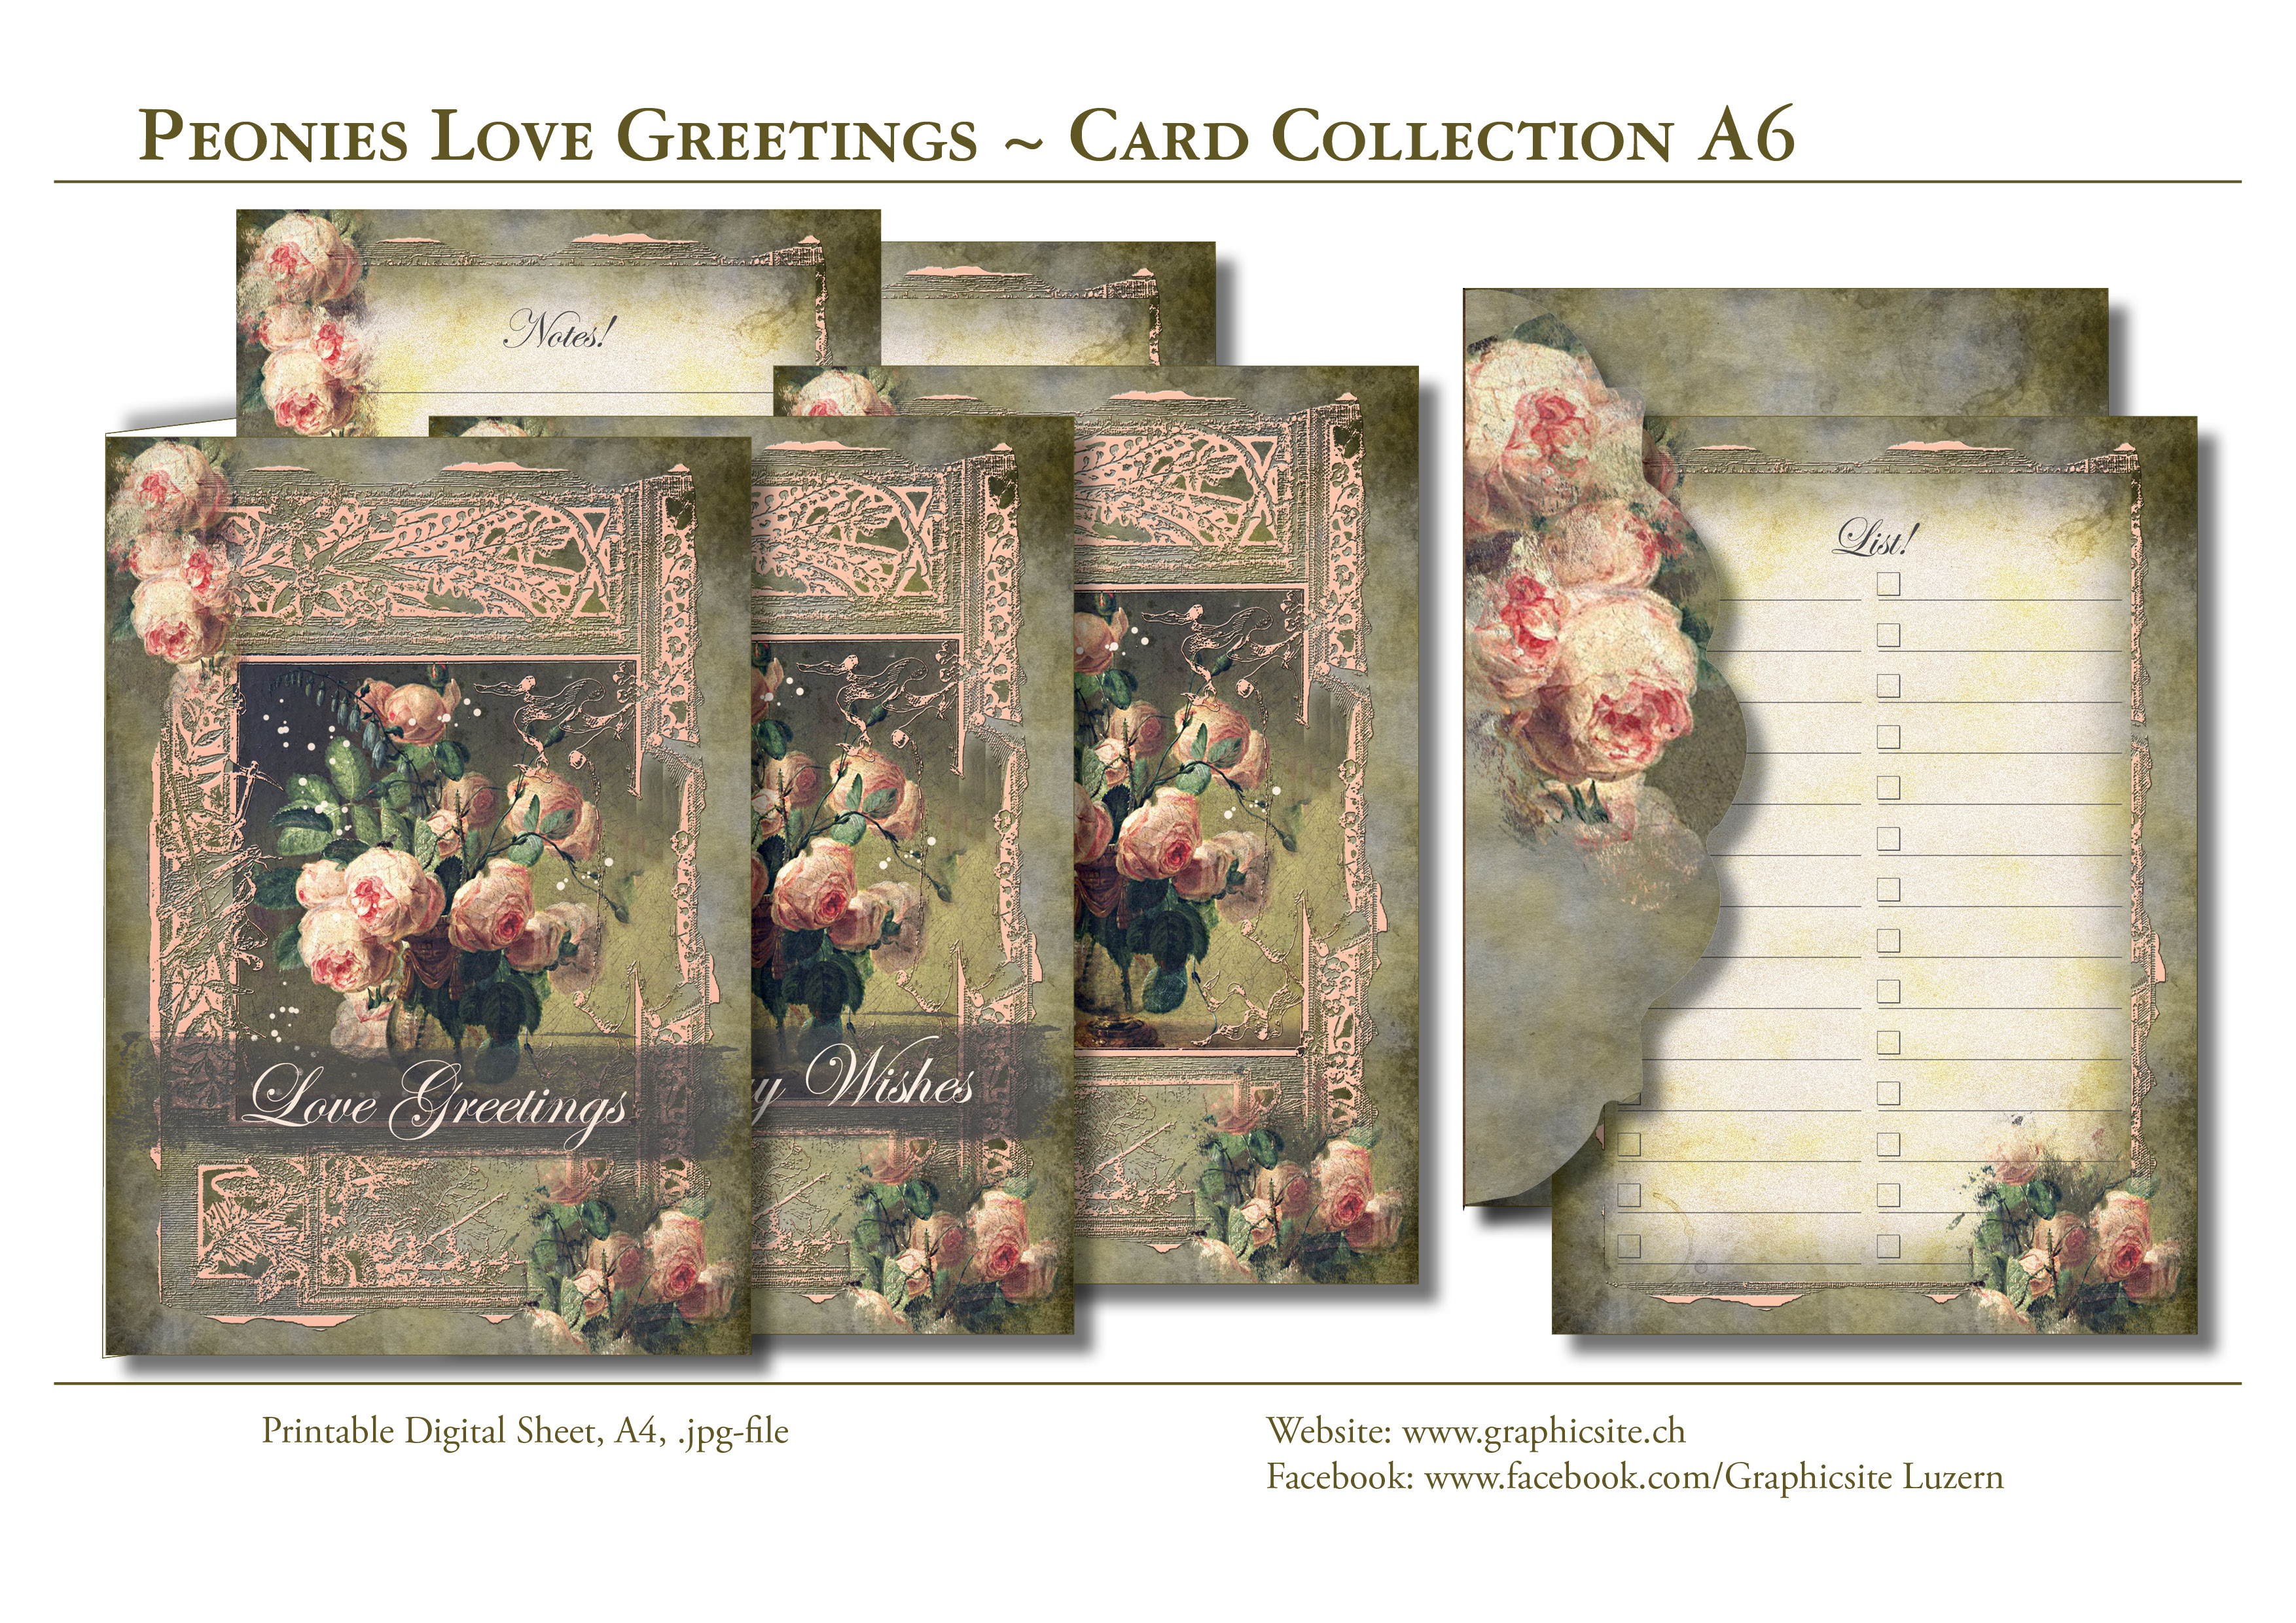 Printable Digital Sheets, scrapbooking, journal, cardmaking, greetingcards, birthday, envelop, graphic design, luzern, flowers, floral, roses, peonies,